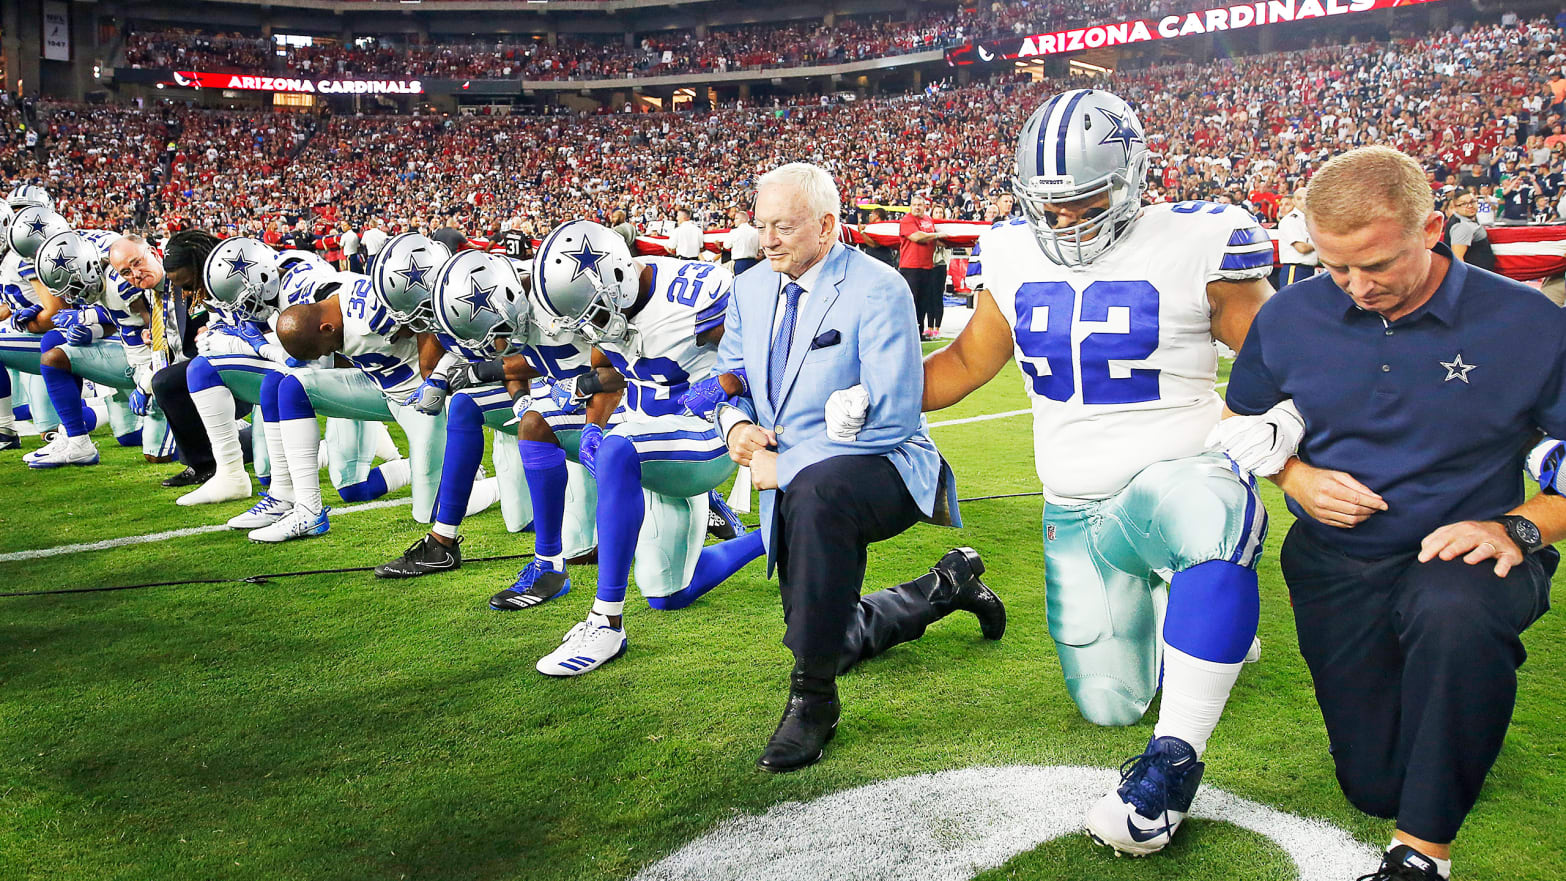 Dallas Cowboys owner Jerry Jones and head coach Jason Garrett kneel with their team